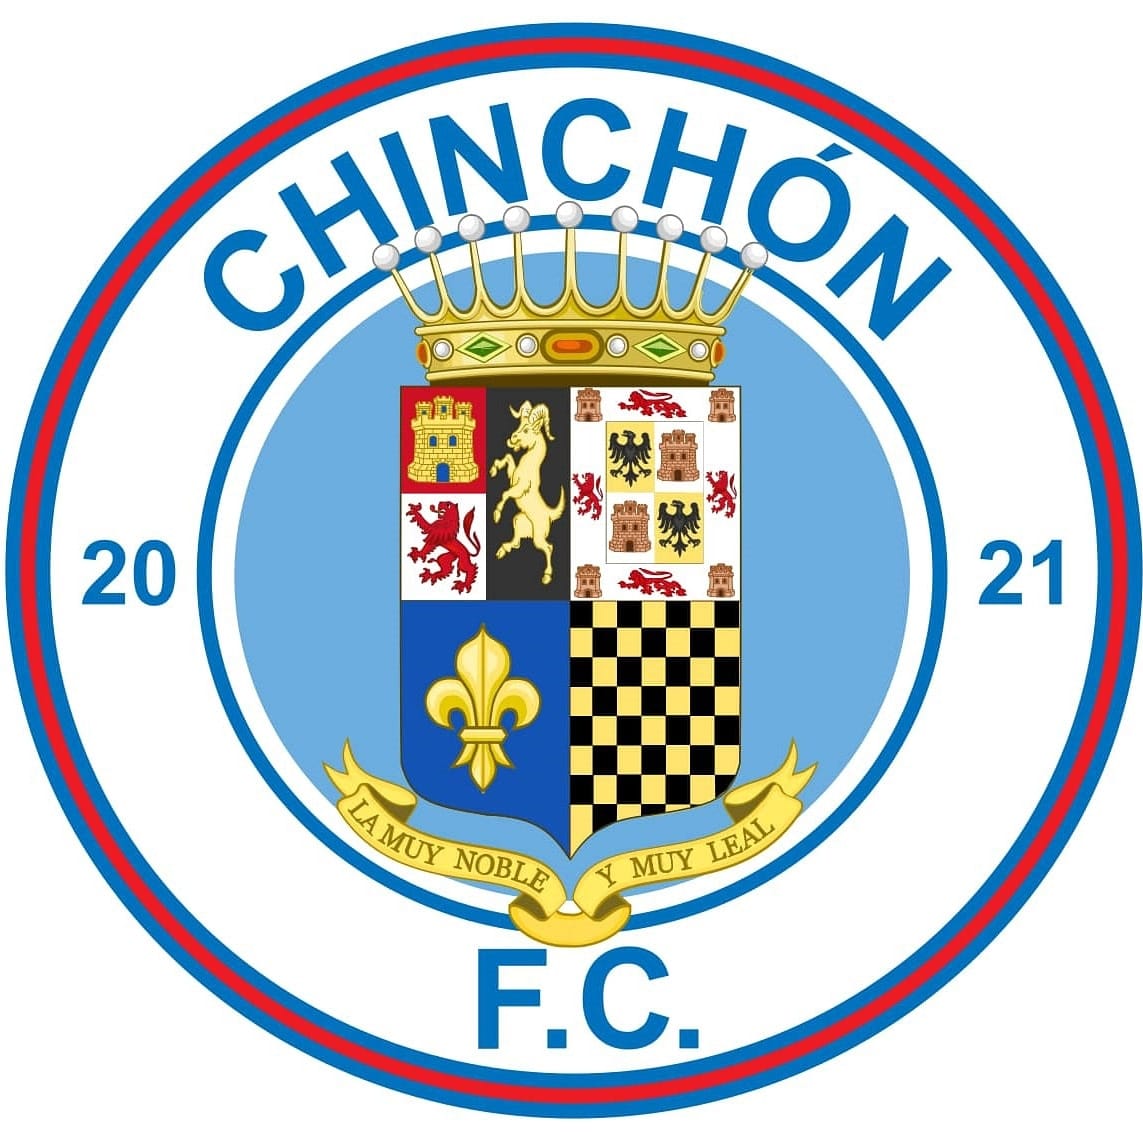 CHINCHON F.C